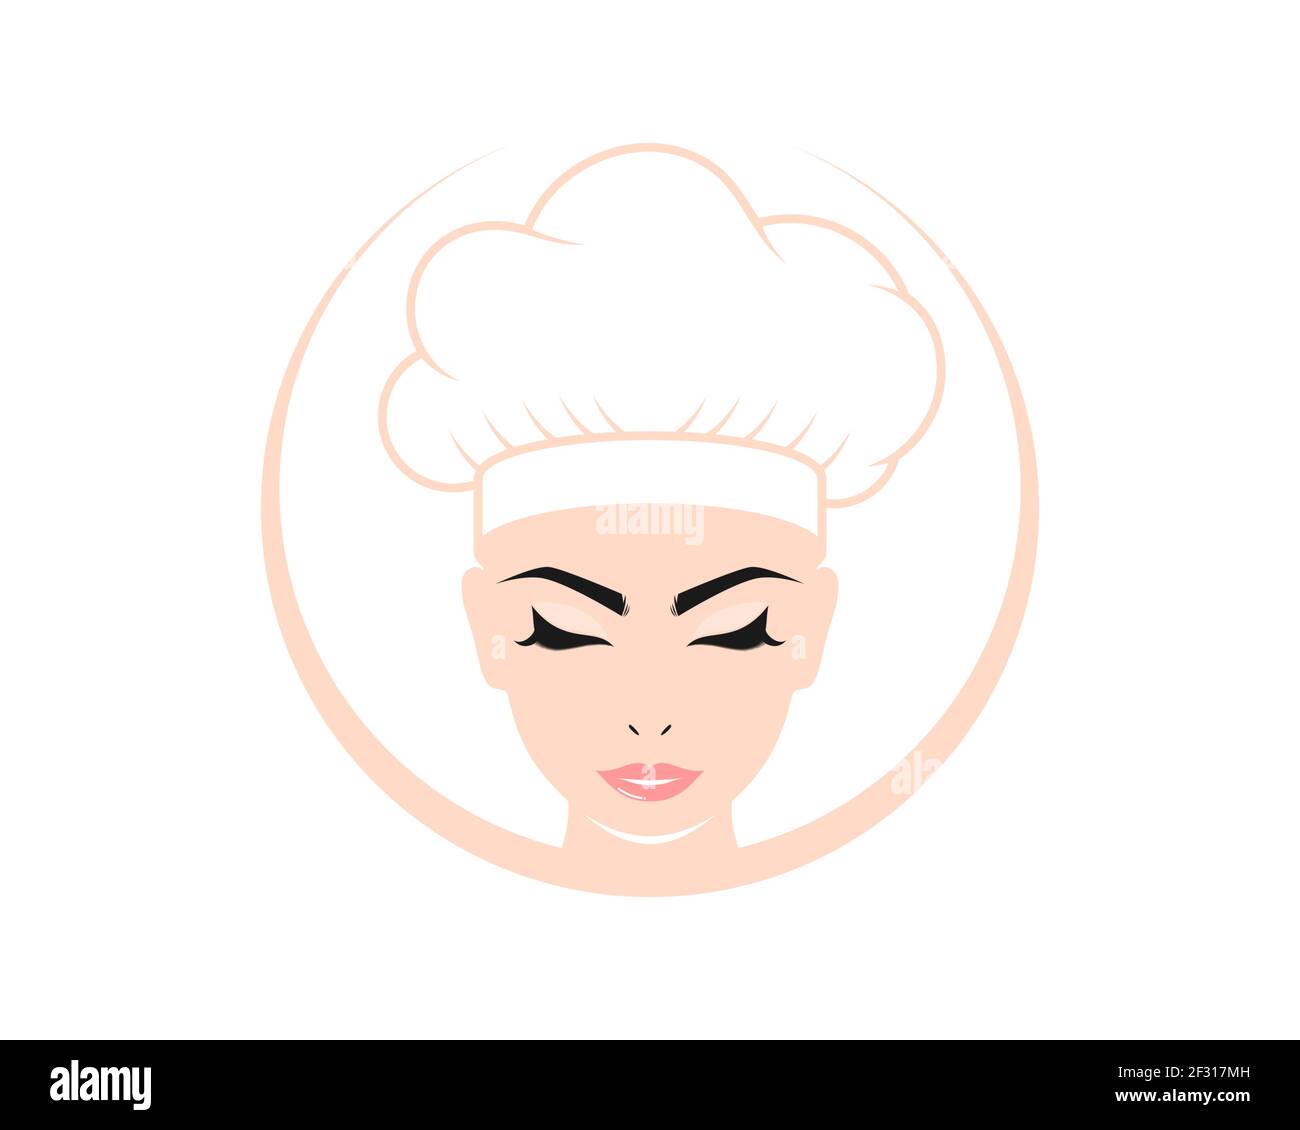 Beauty woman chef character logo Stock Photo